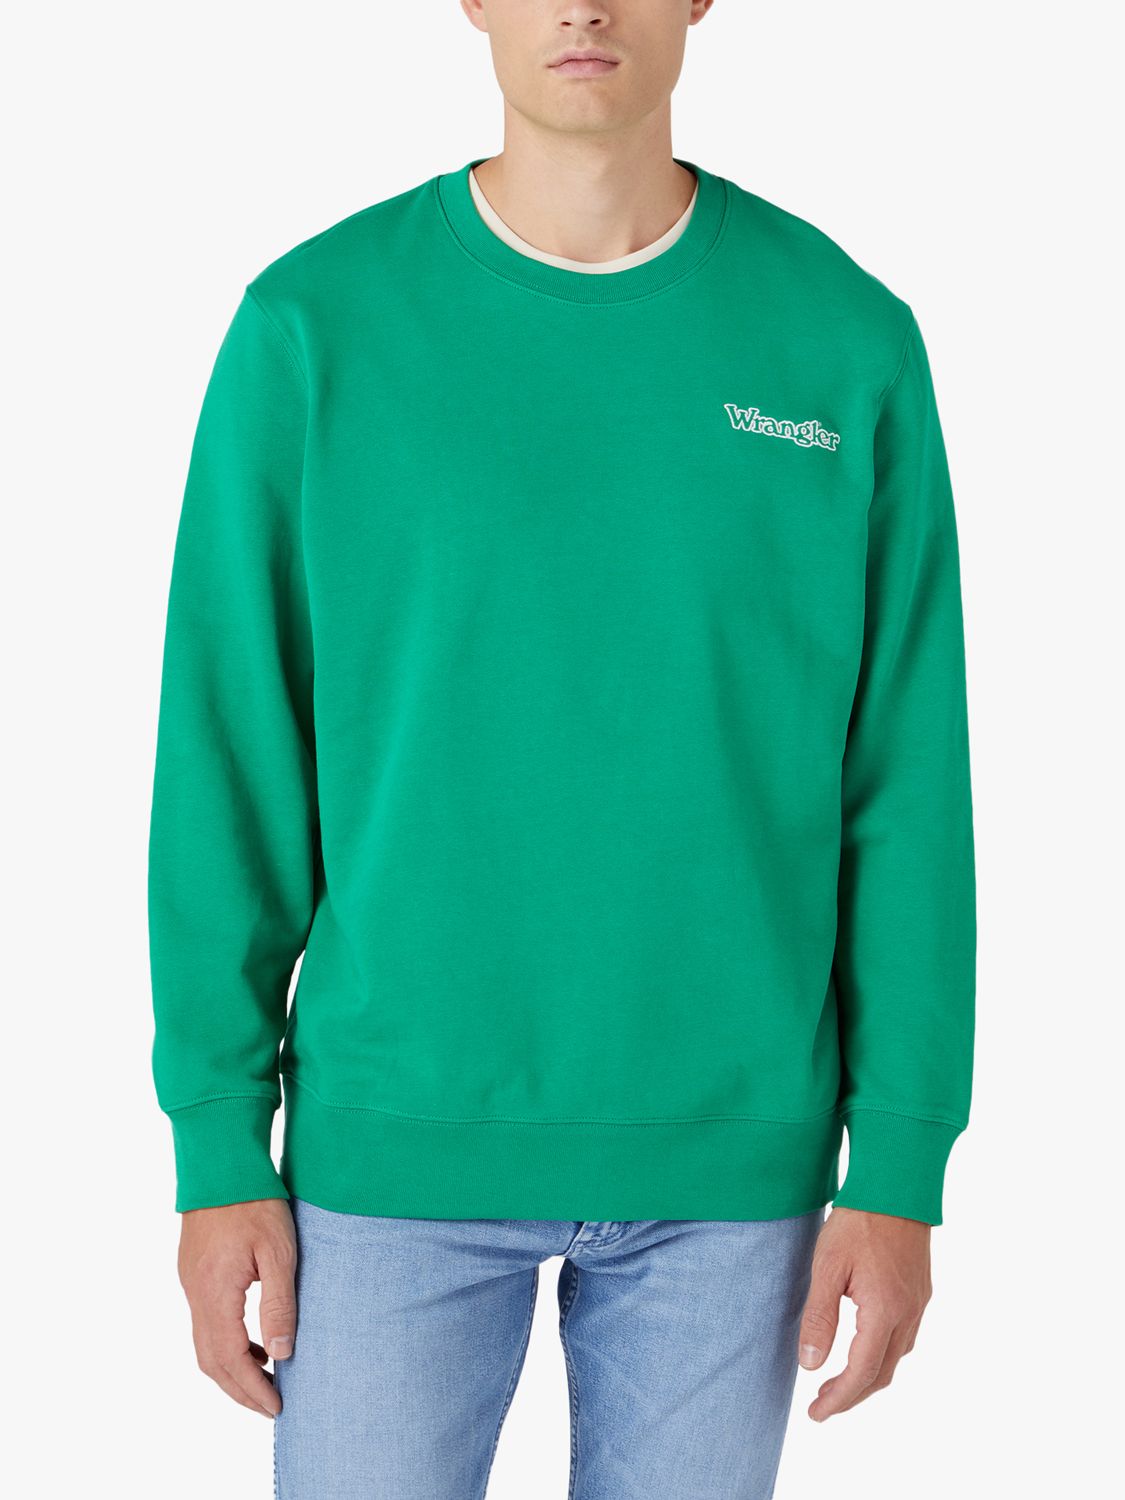 Wrangler Graphic Logo Crew Sweatshirt, Leprechaun Green